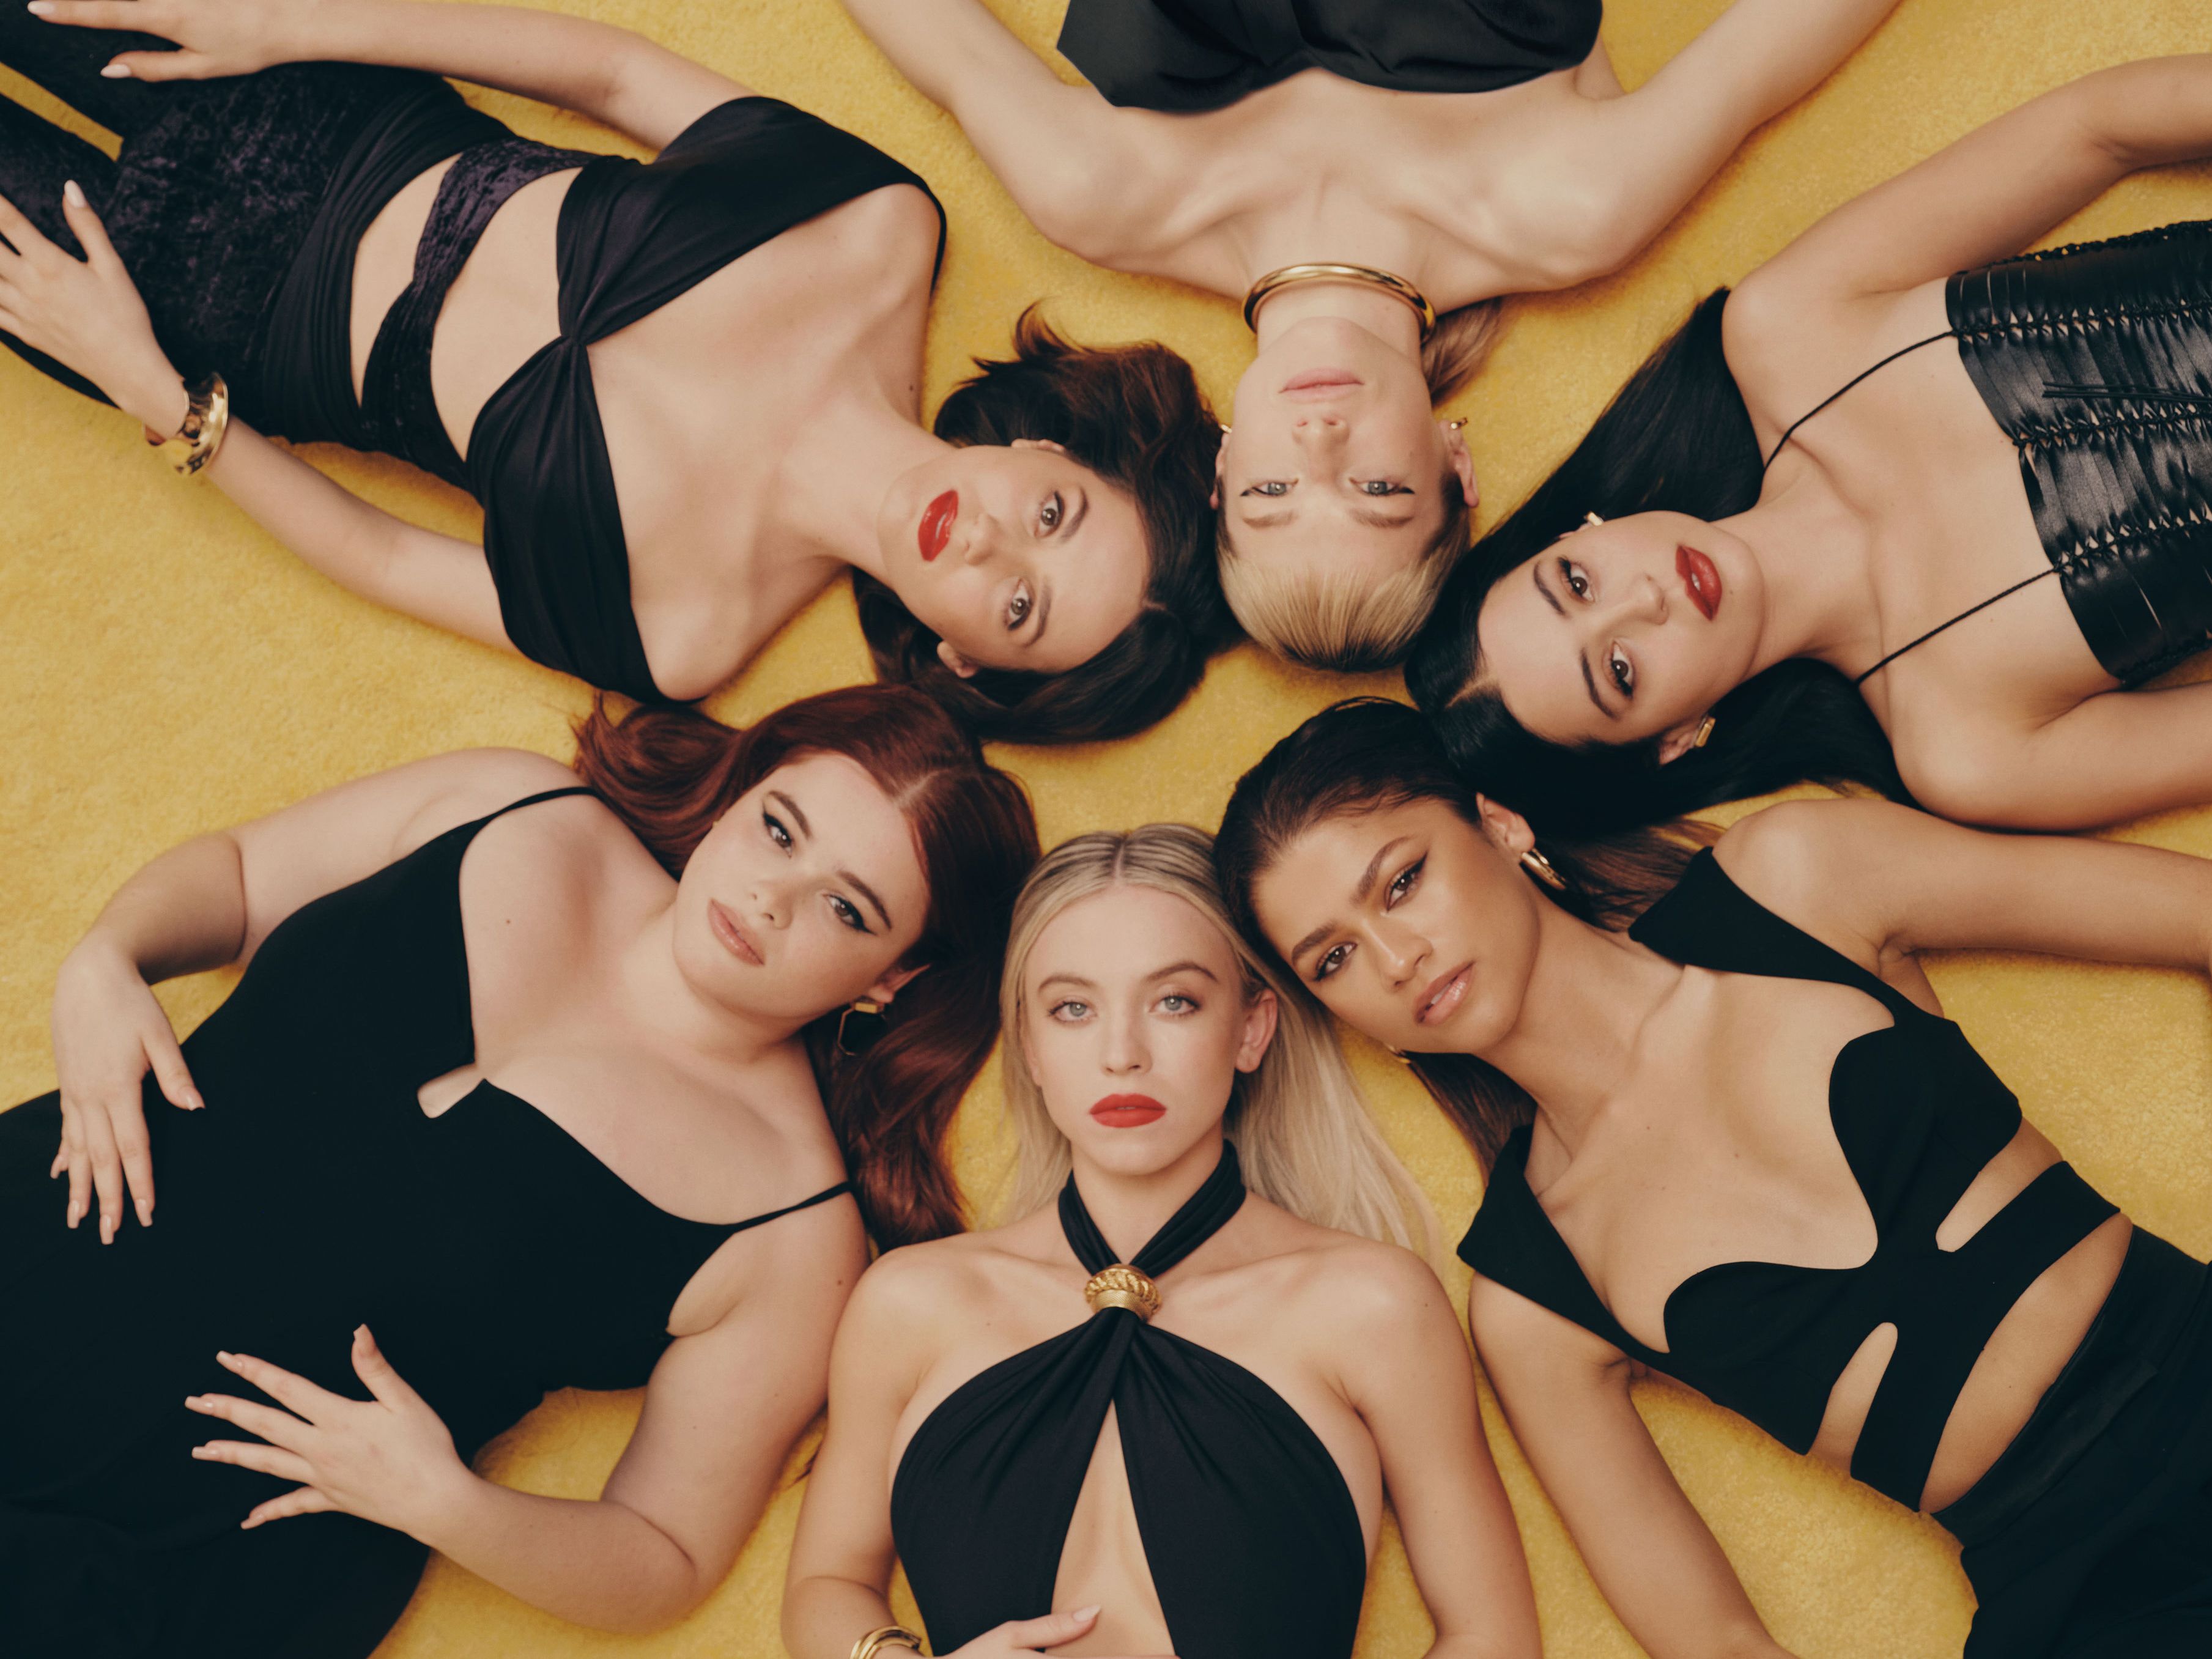 Tiny Girls Sleeping Blowjob - Euphoria' Cast Interview: The Women Make 'Euphoria'